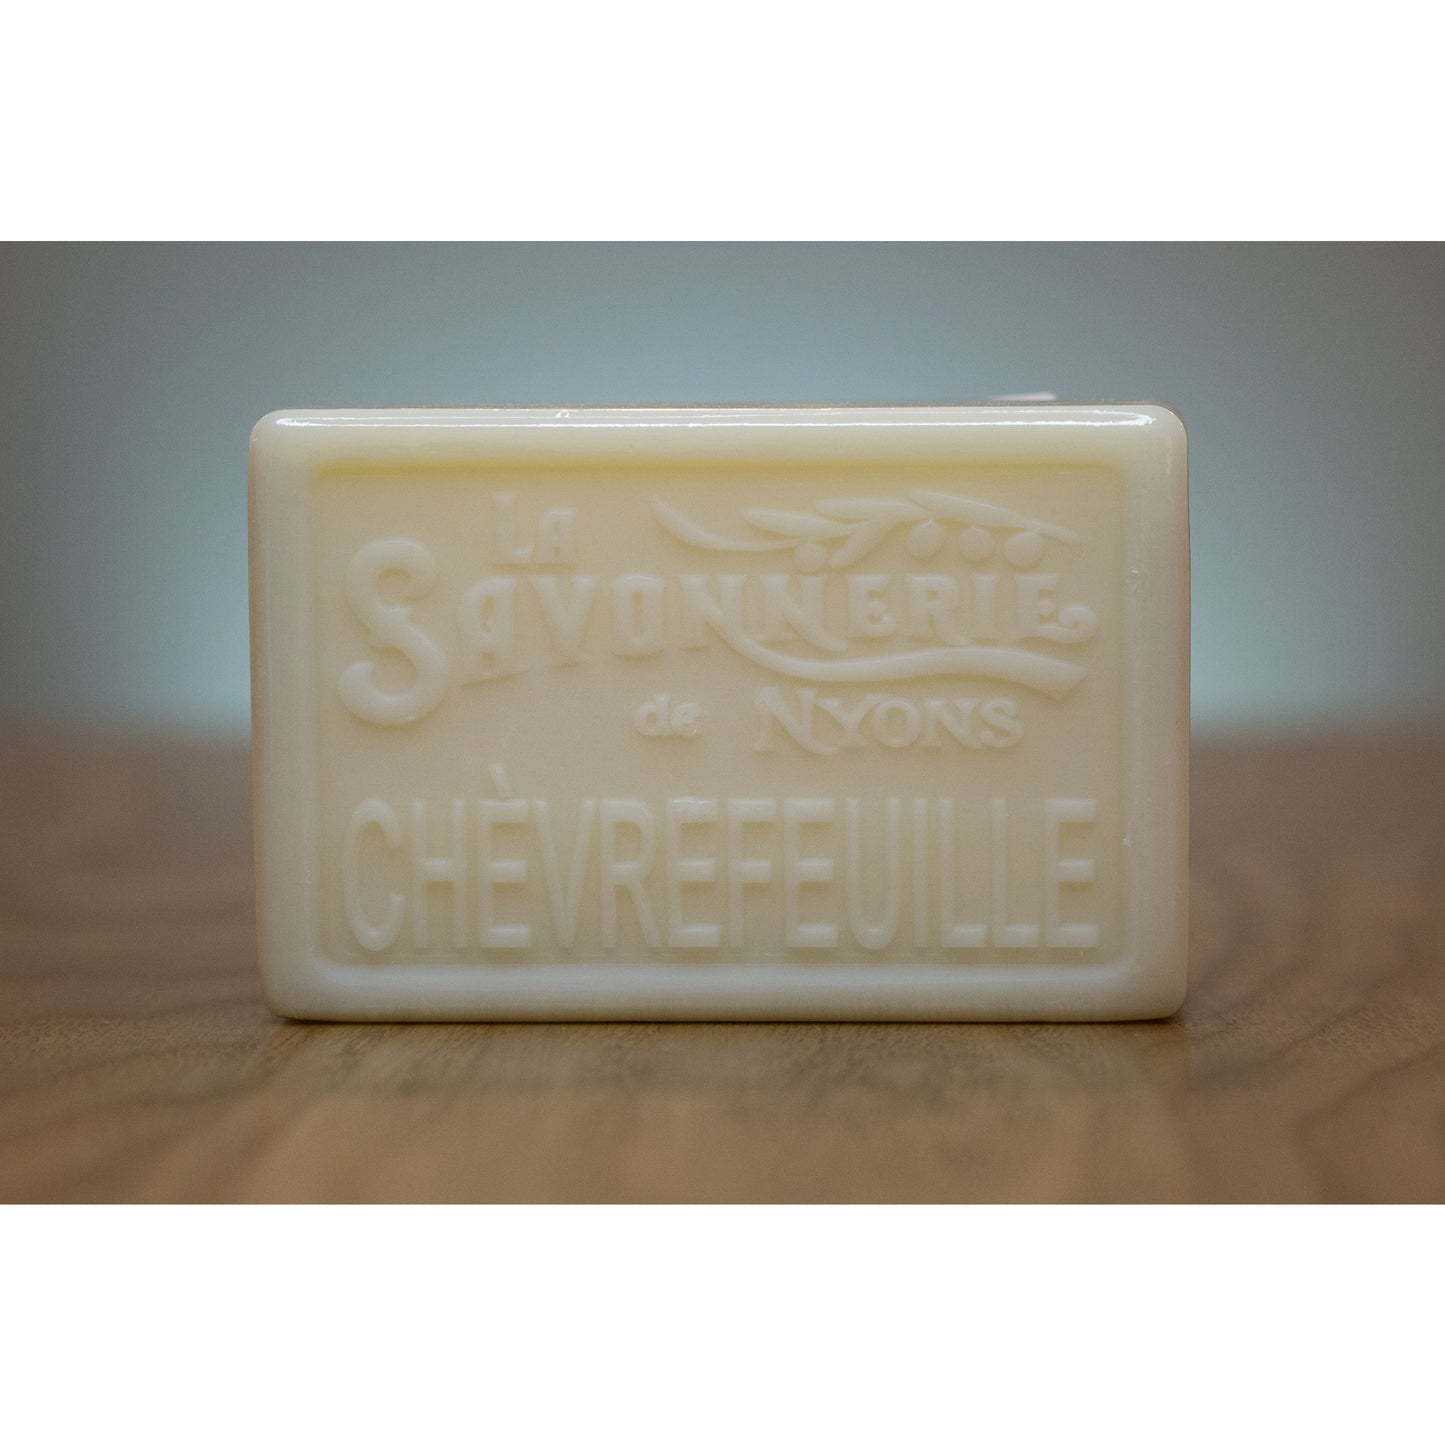 Honeysuckle Soap, 3.5oz - La petite France Vilnius - Soap